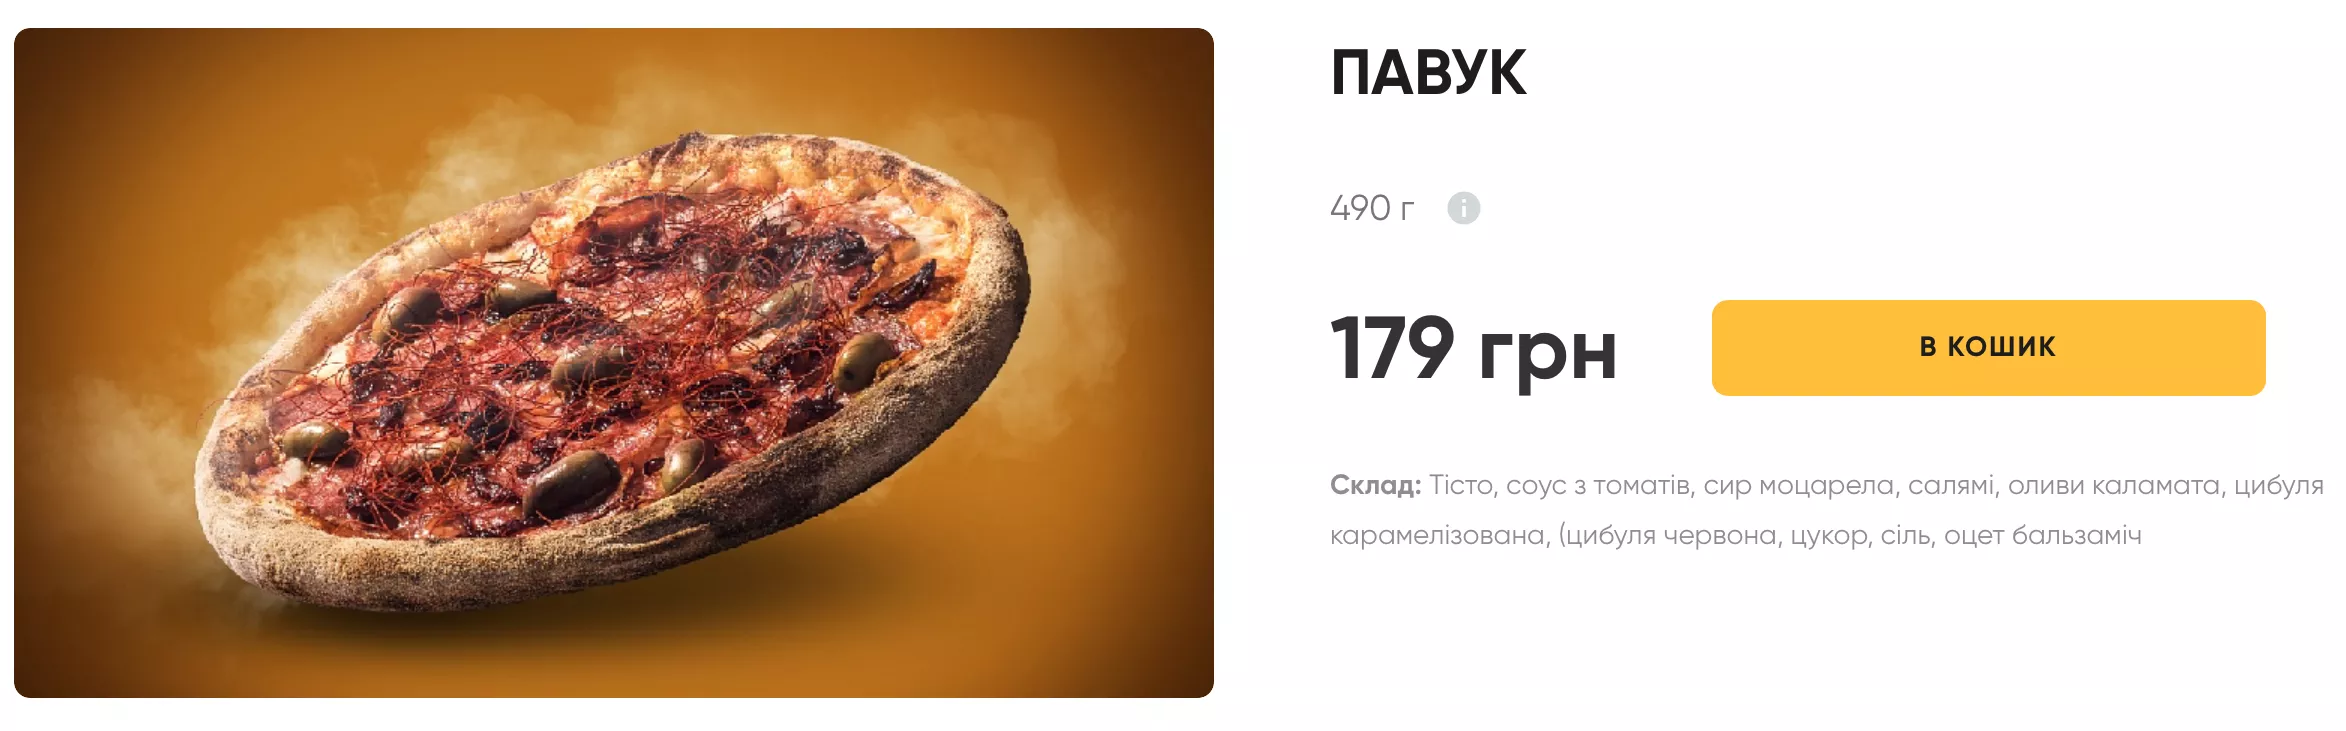 Піца "Павук" за 179 гривень